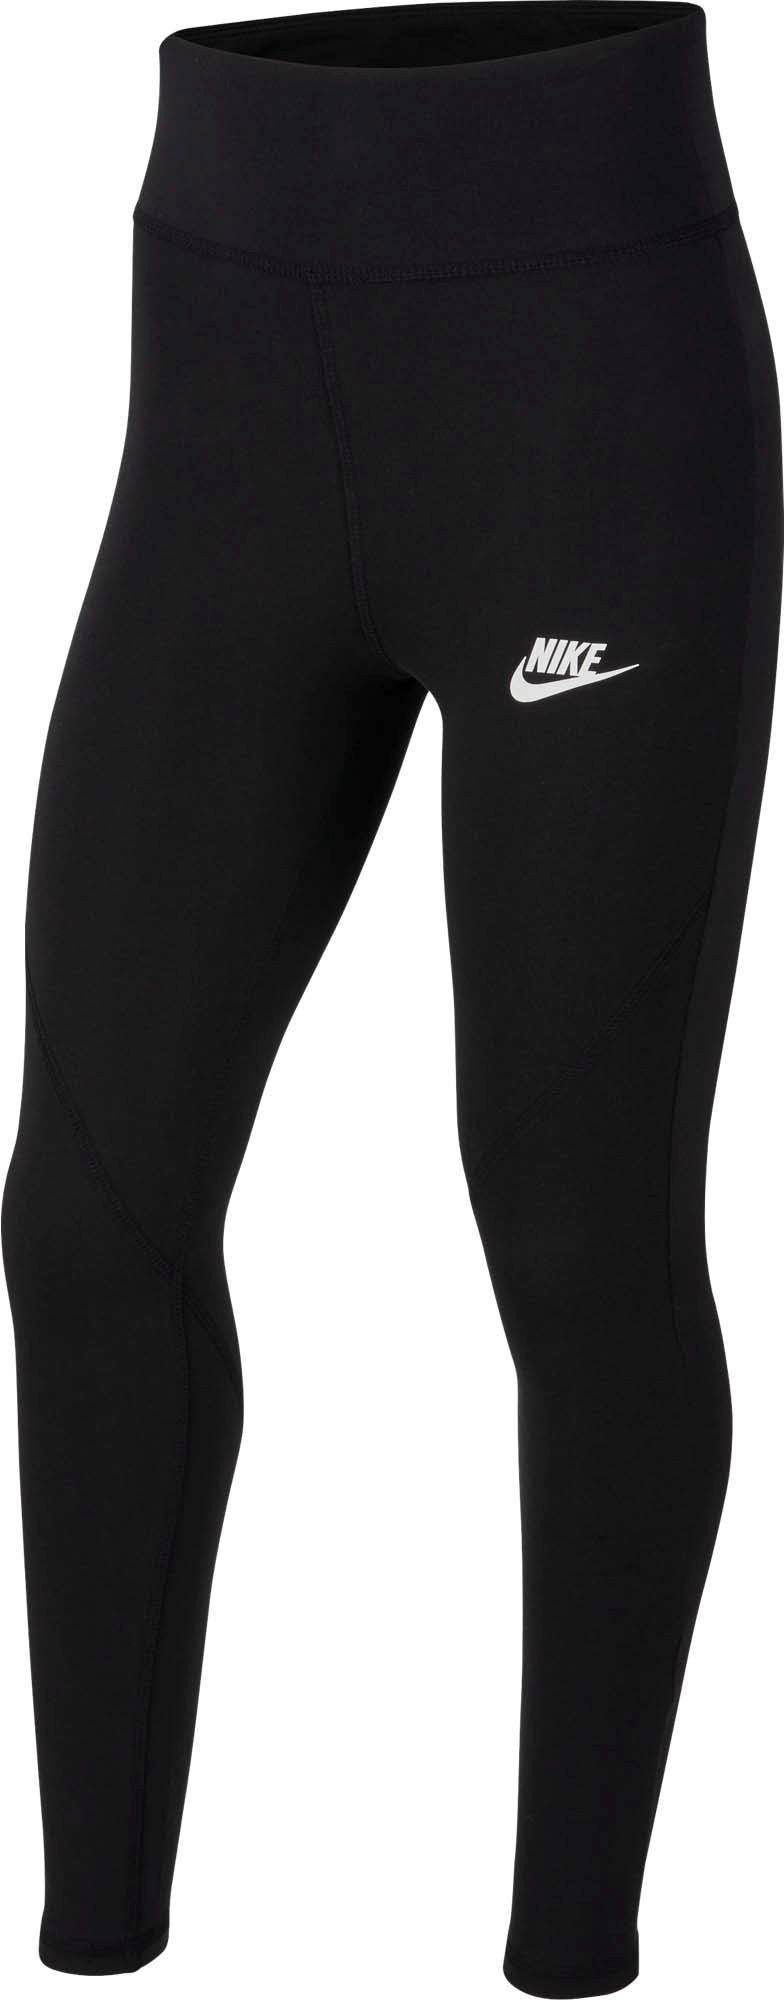 LEGGINGS Nike (GIRLS) - Leggings BIG Sportswear für FAVORITES schwarz KIDS' HIGH-WAISTED Kinder